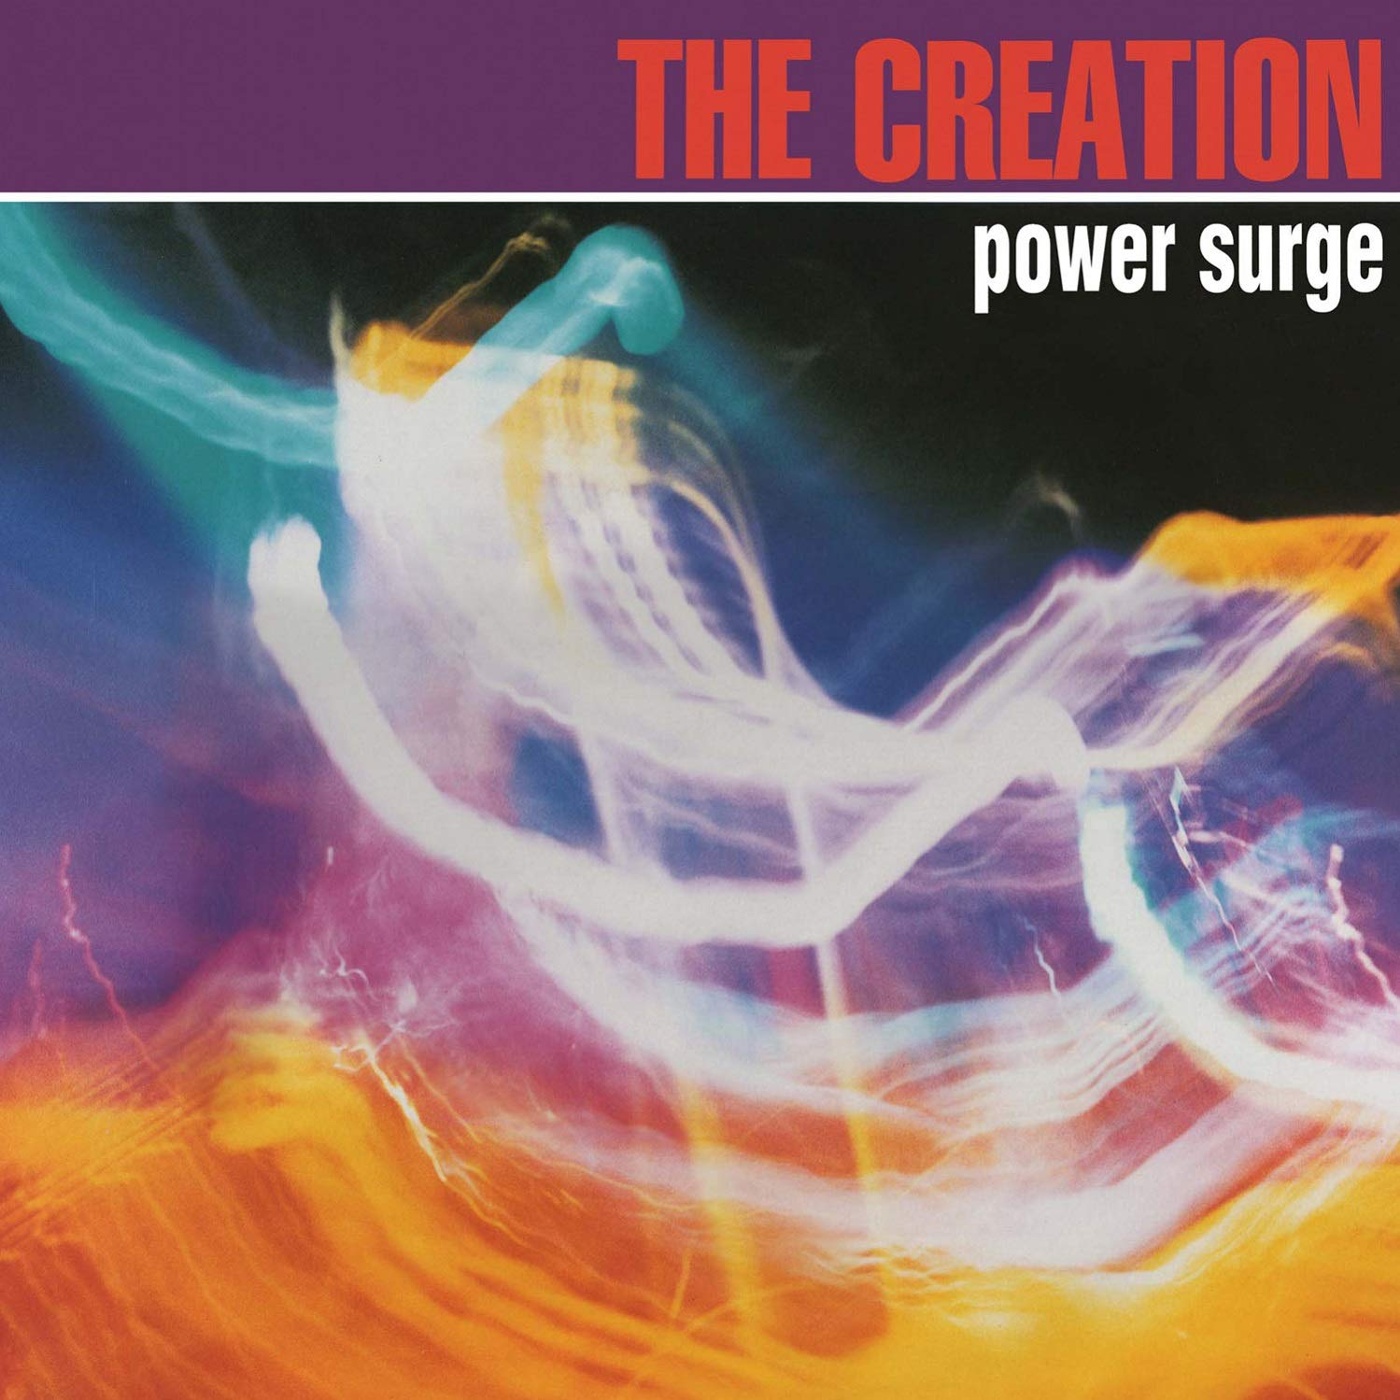 The Power and Creation книга. ((( O ))) альбом ((( 1 ))) Creation. Creation "Power Surge".